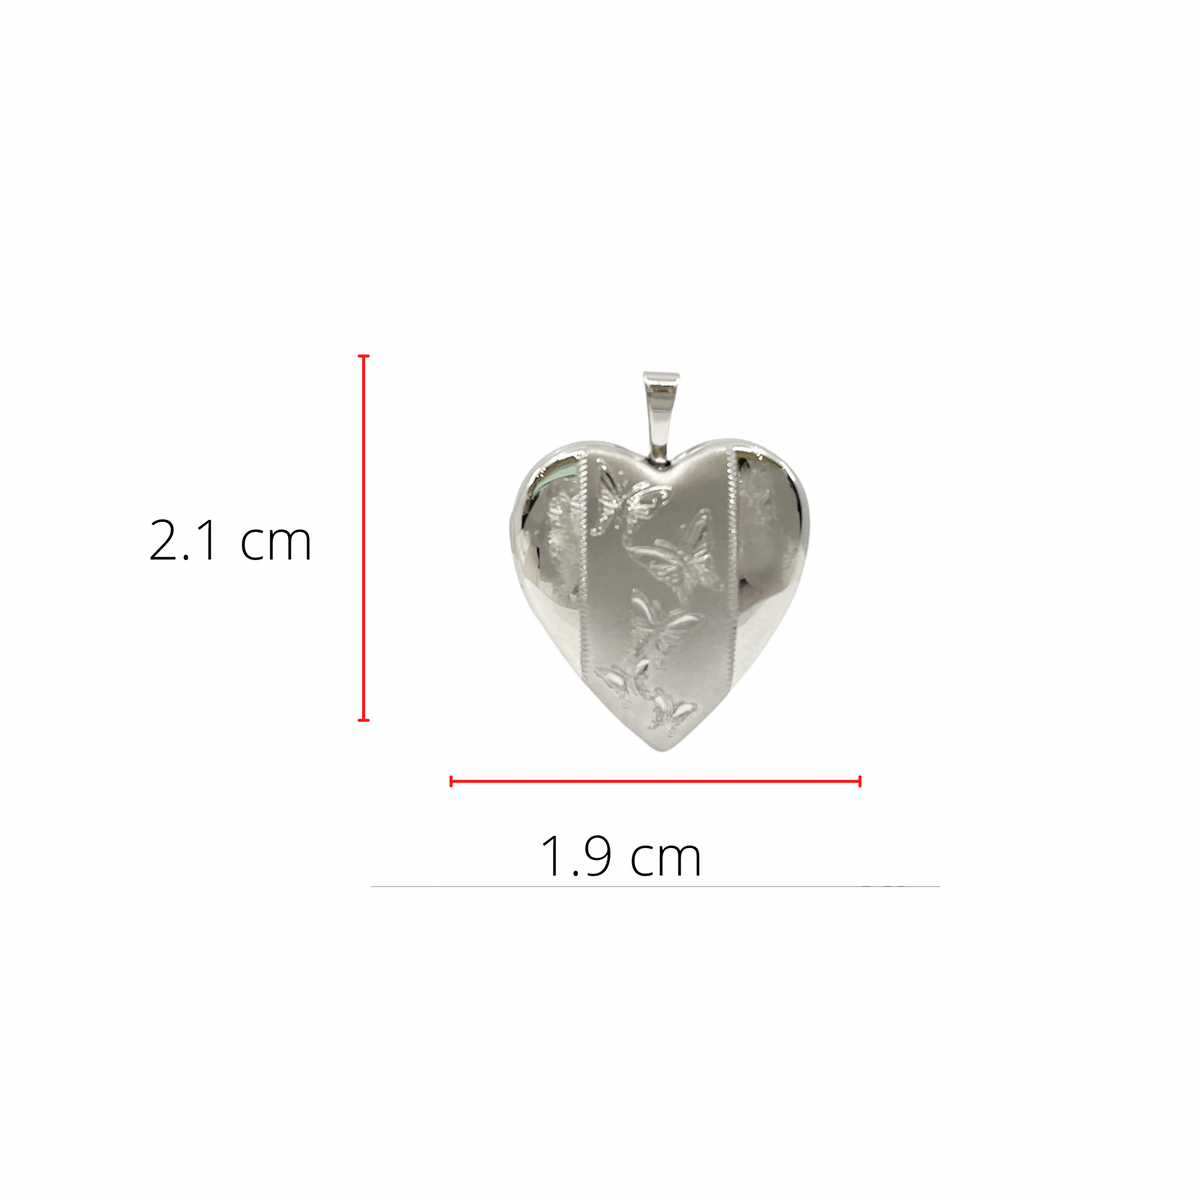 925 Sterling Silver Etched Butterflies Heart Shaped Locket - 19mm x 21mm